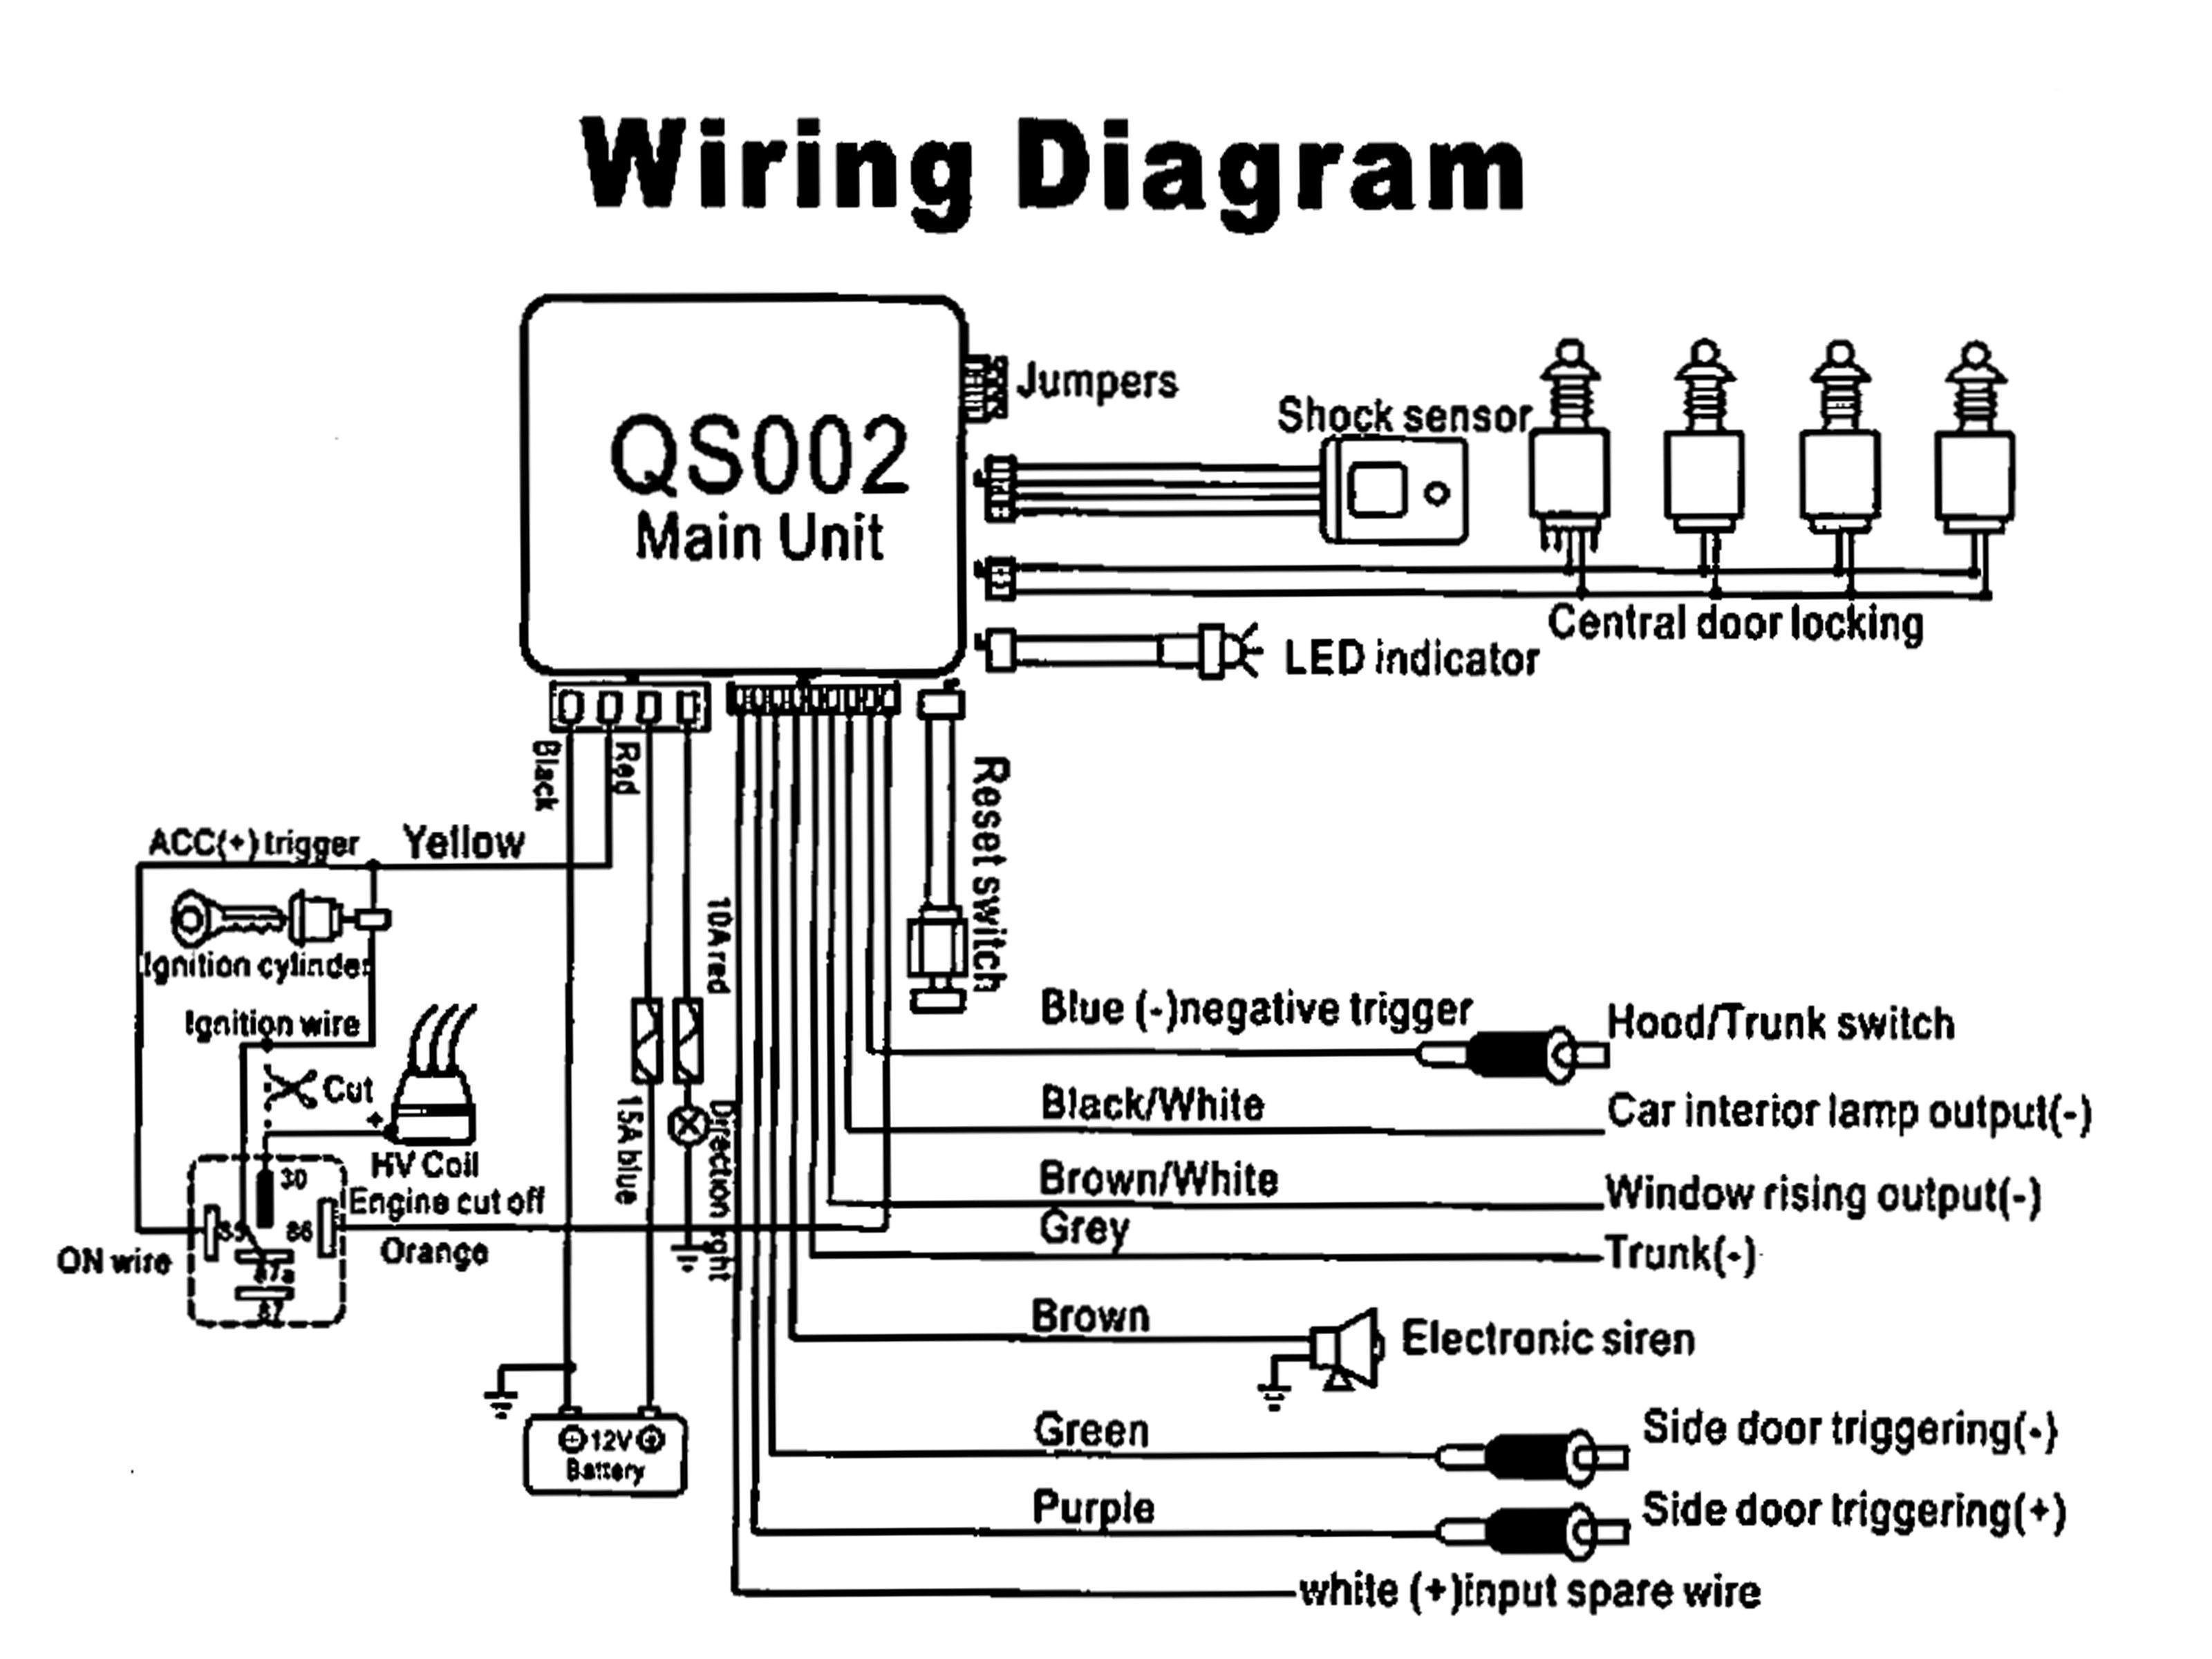 Vision Car Alarm Wiring Diagram Lx450 for Car Alarm Wiring Diagram Wiring Diagram New Of Vision Car Alarm Wiring Diagram